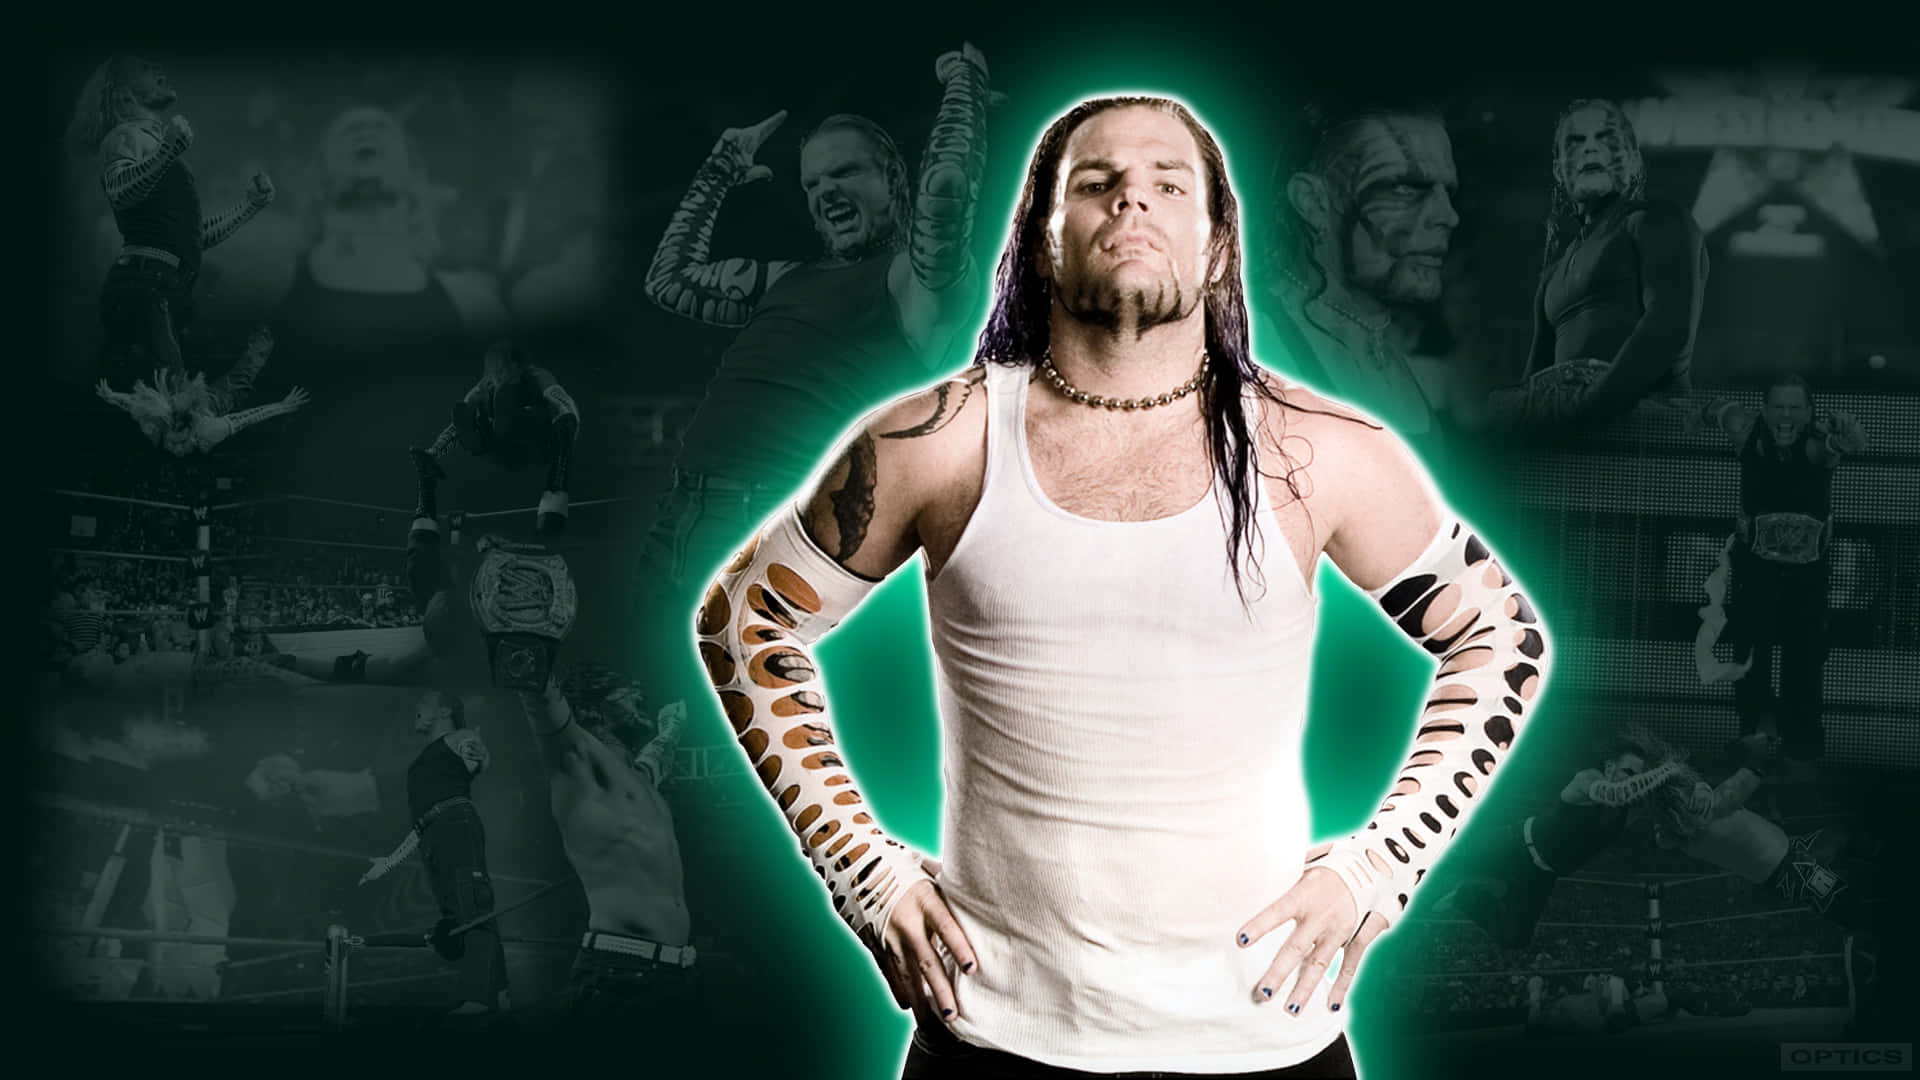 Wrestler Jeff Hardy Cool Poster Wallpaper